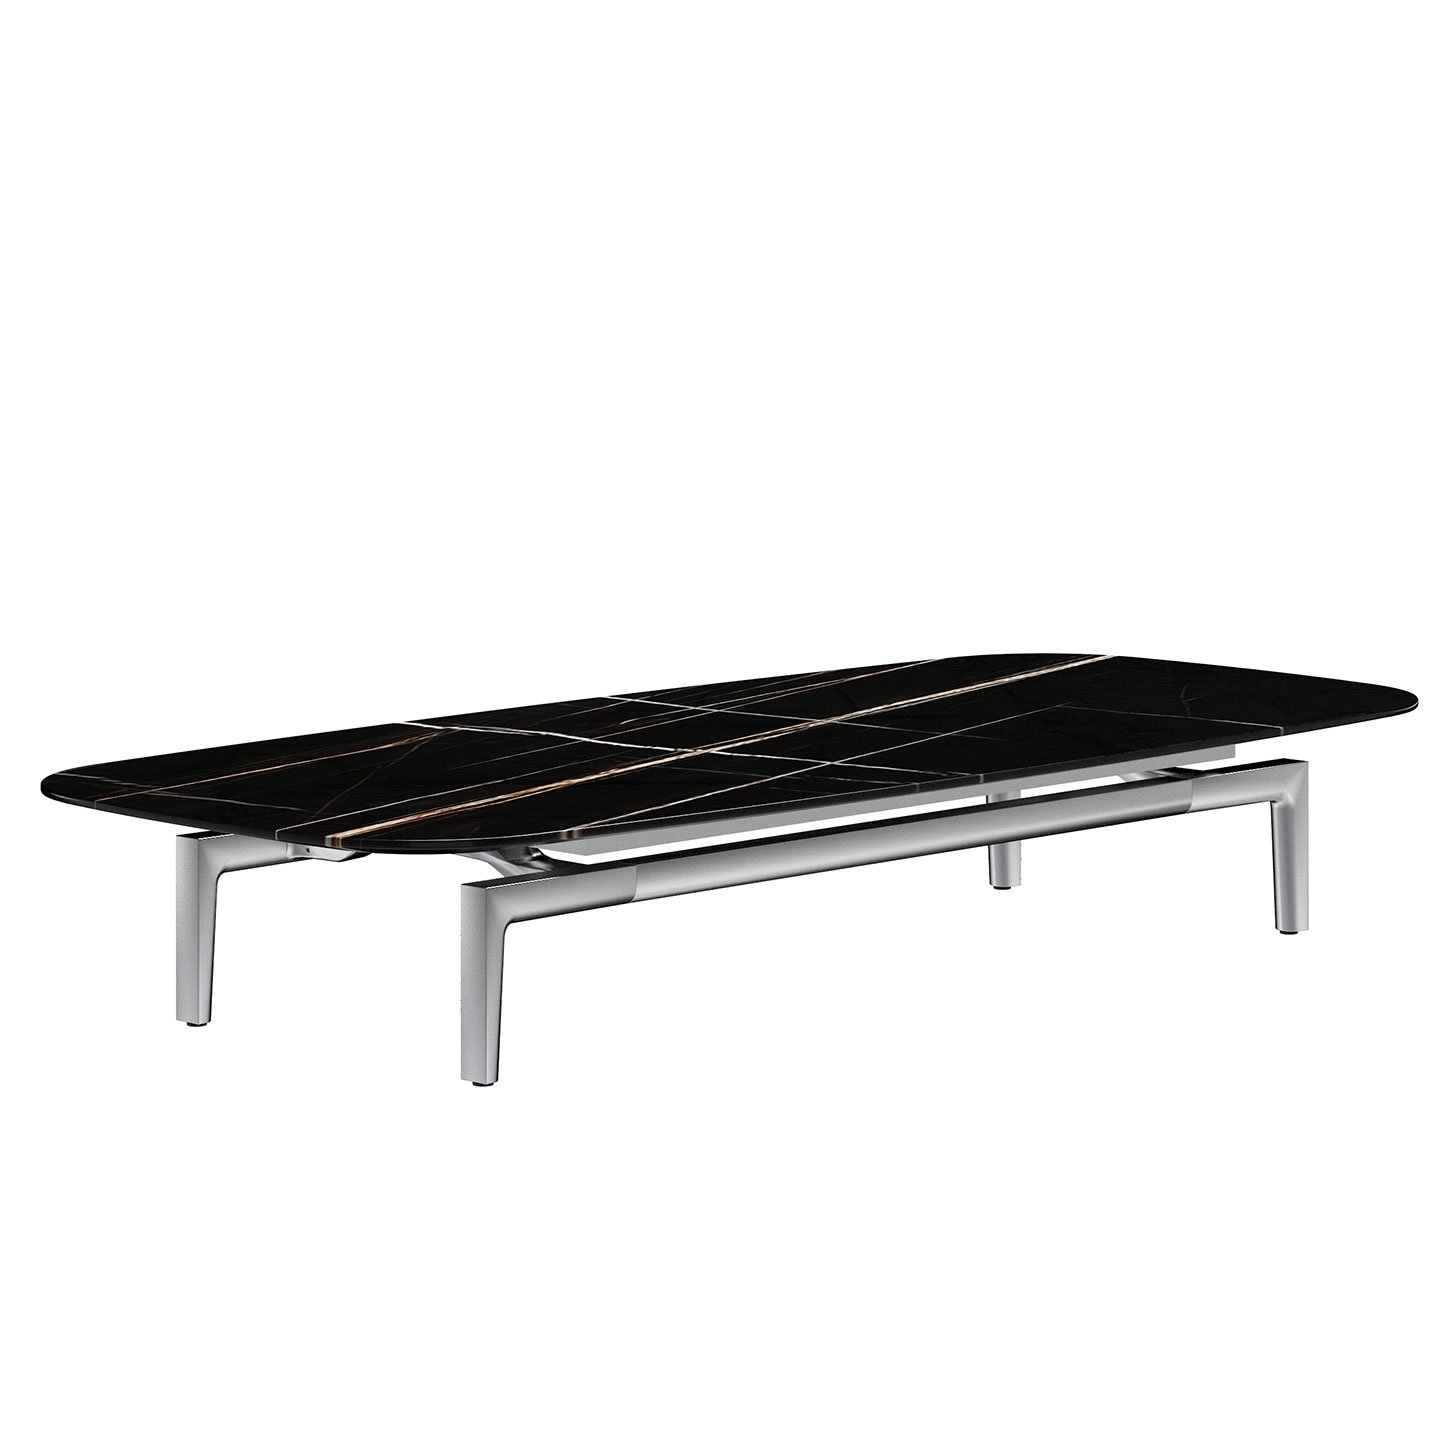 Haworth Volage table single tier coffee table with Sahara noir 